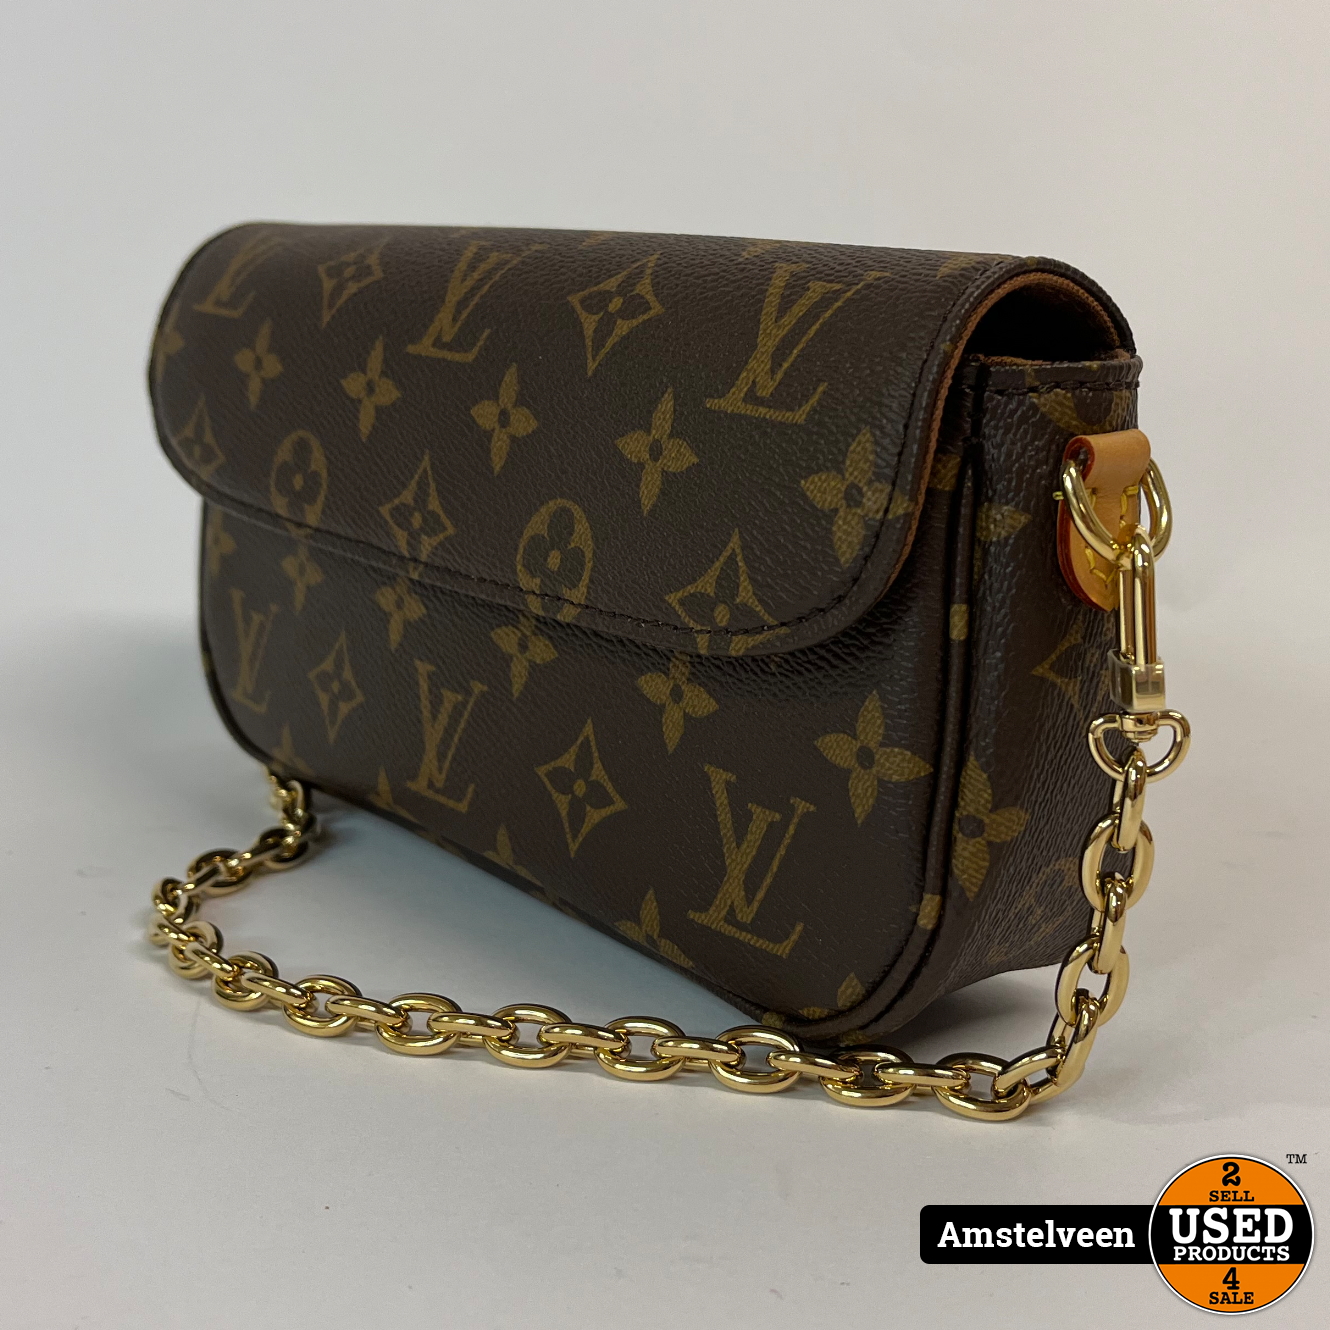 Louis Vuitton M81911 Ivy Wallet On Chain Bag